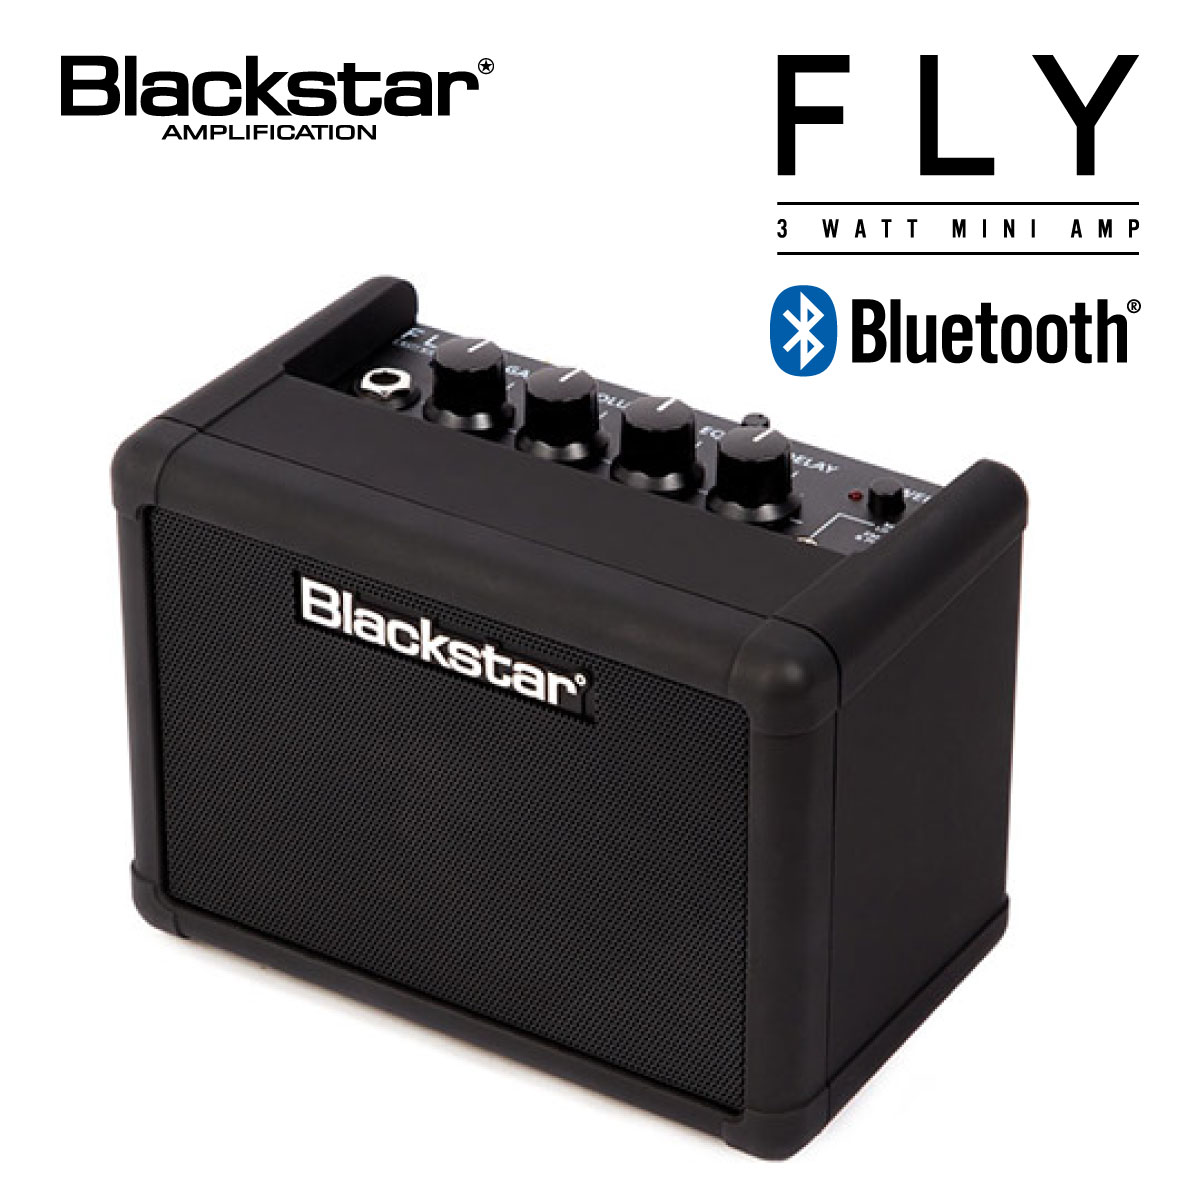 【3W】Blackstar FLY 3 Bluetooth 新品 ミニアンプ ブラックスター MINIAMP 3ワット コンボ,Guitar combo amplifier